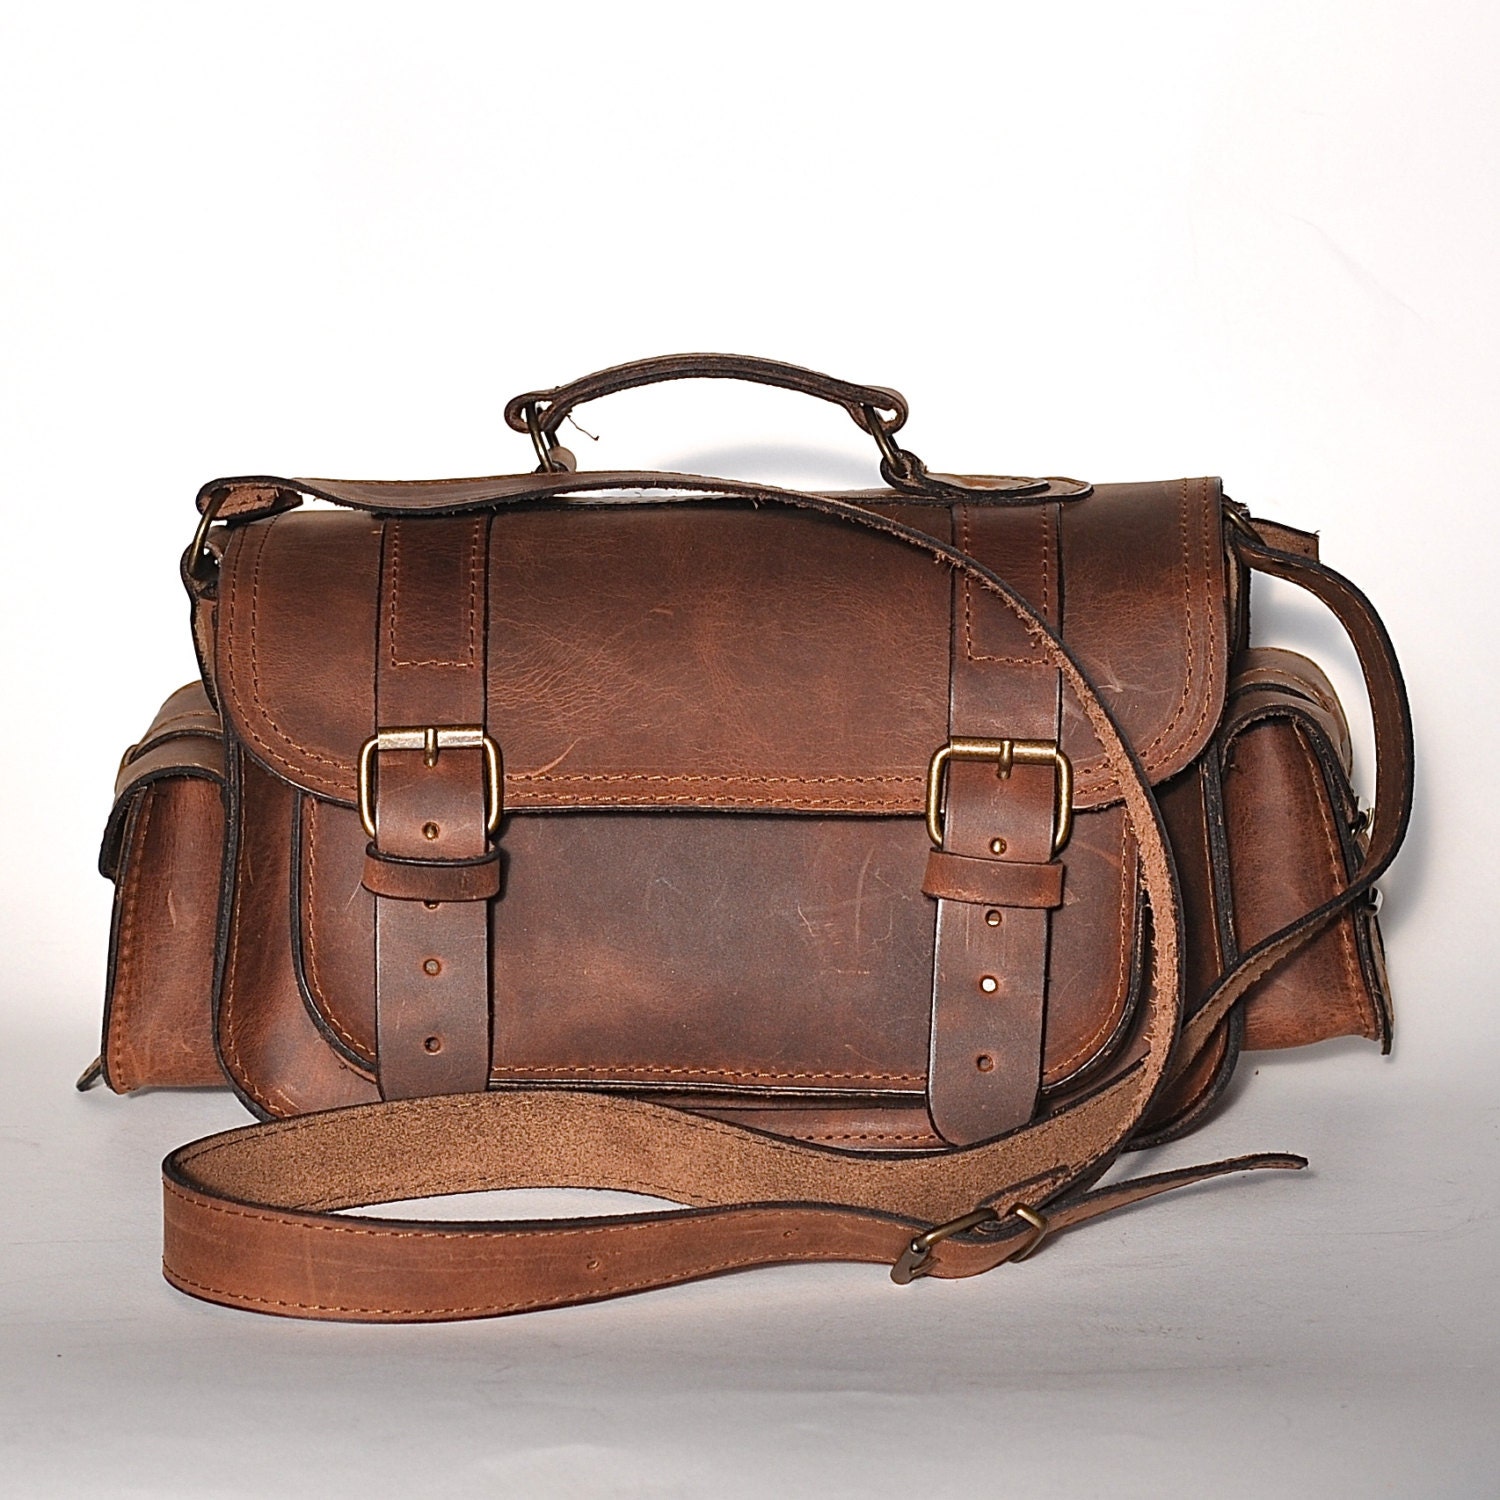 Medium size leather camera bag / Women/Men chestnut leather